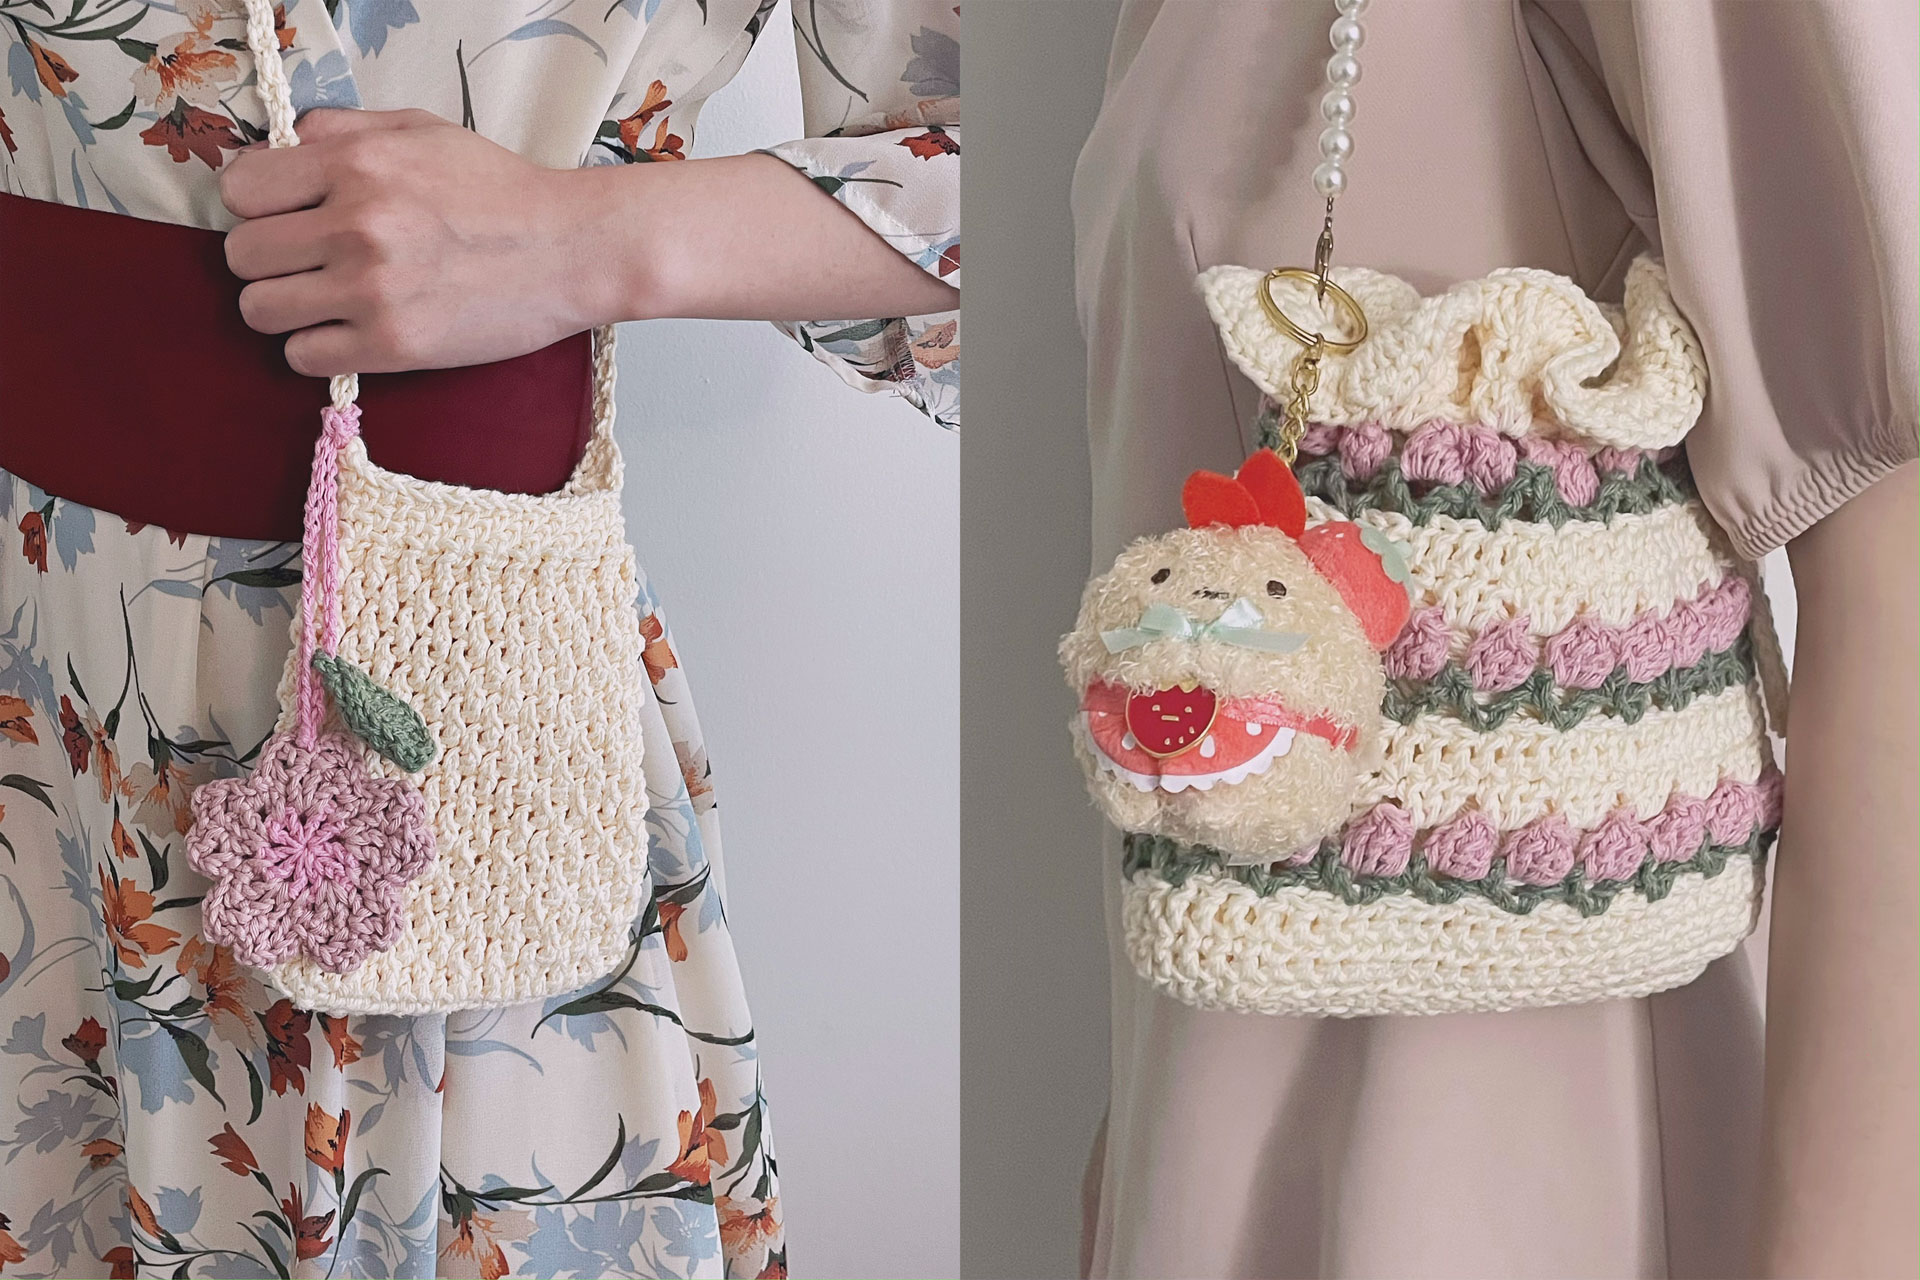 on the left: a beige alpine stitch shoulder bag with a sakura bag charm; on the right: a pink tulip stitch shoulder bag